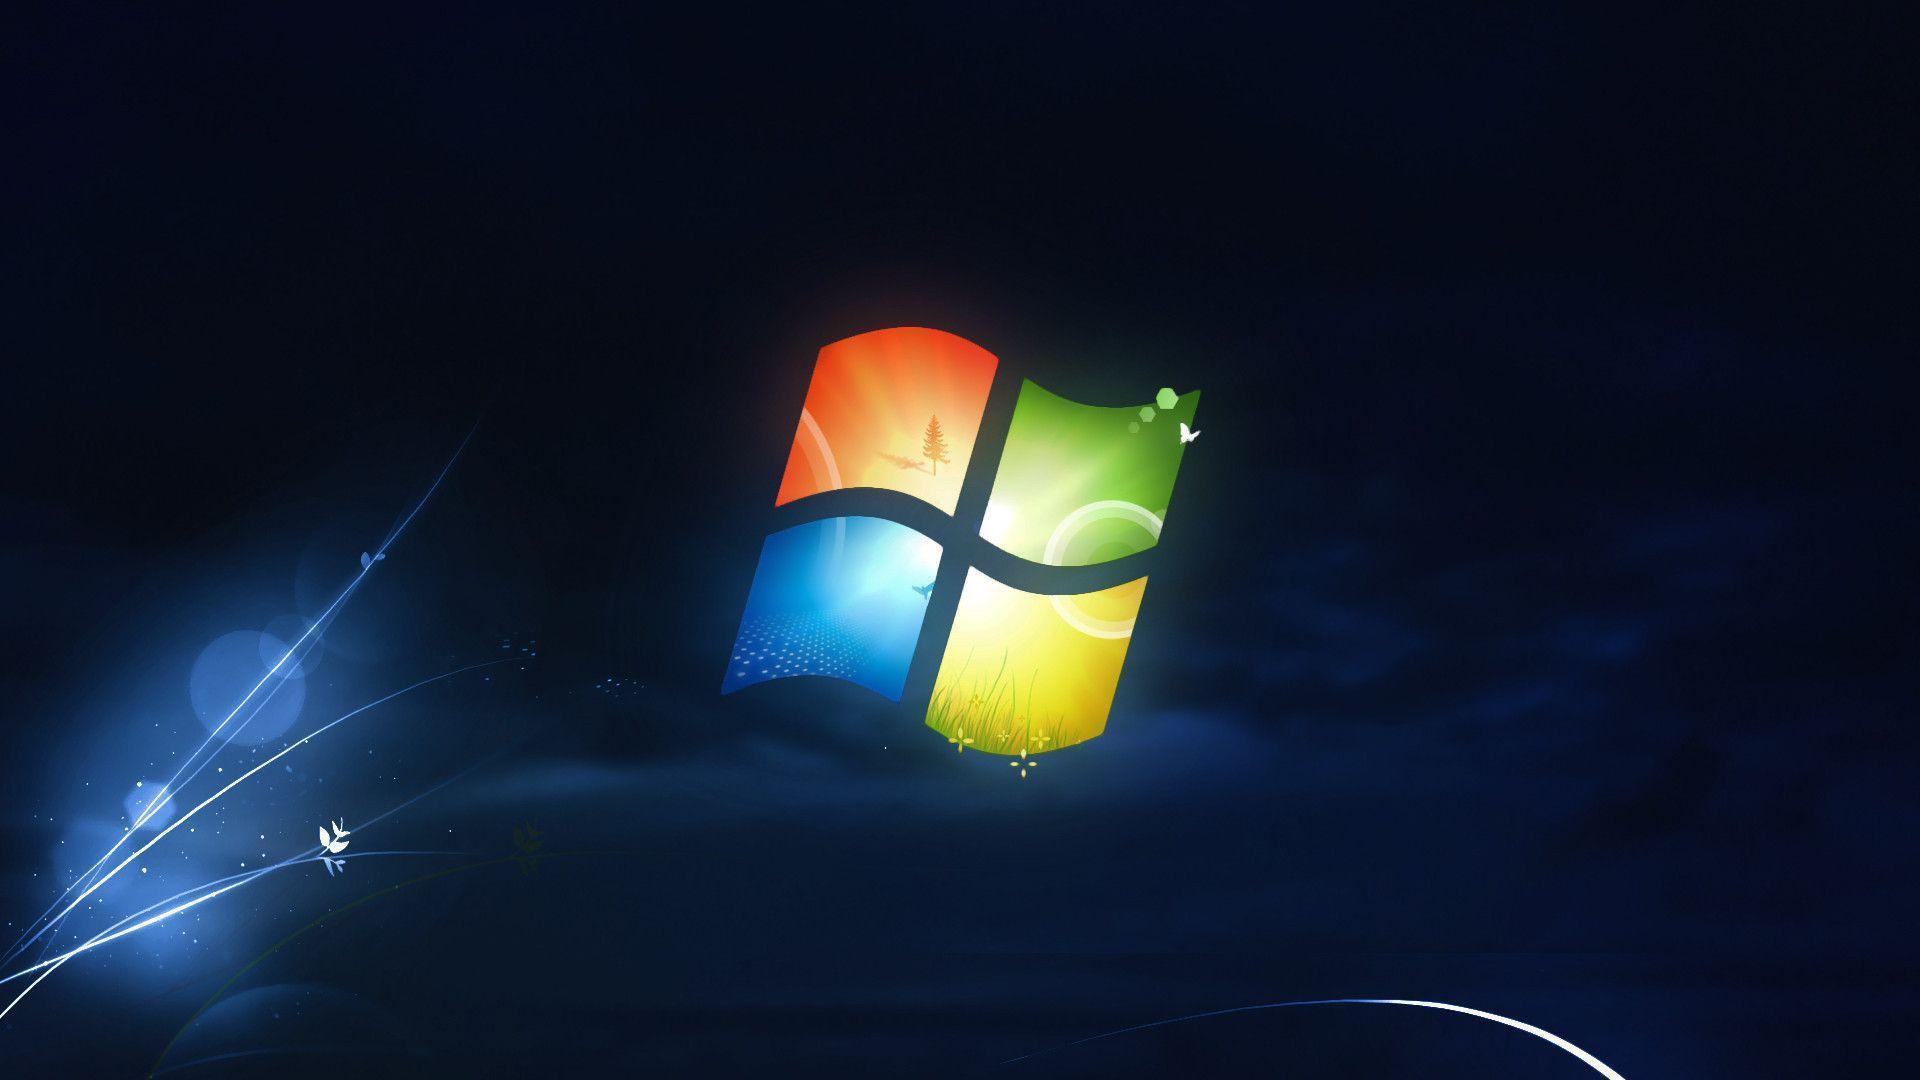 Microsoft desktop backgrounds